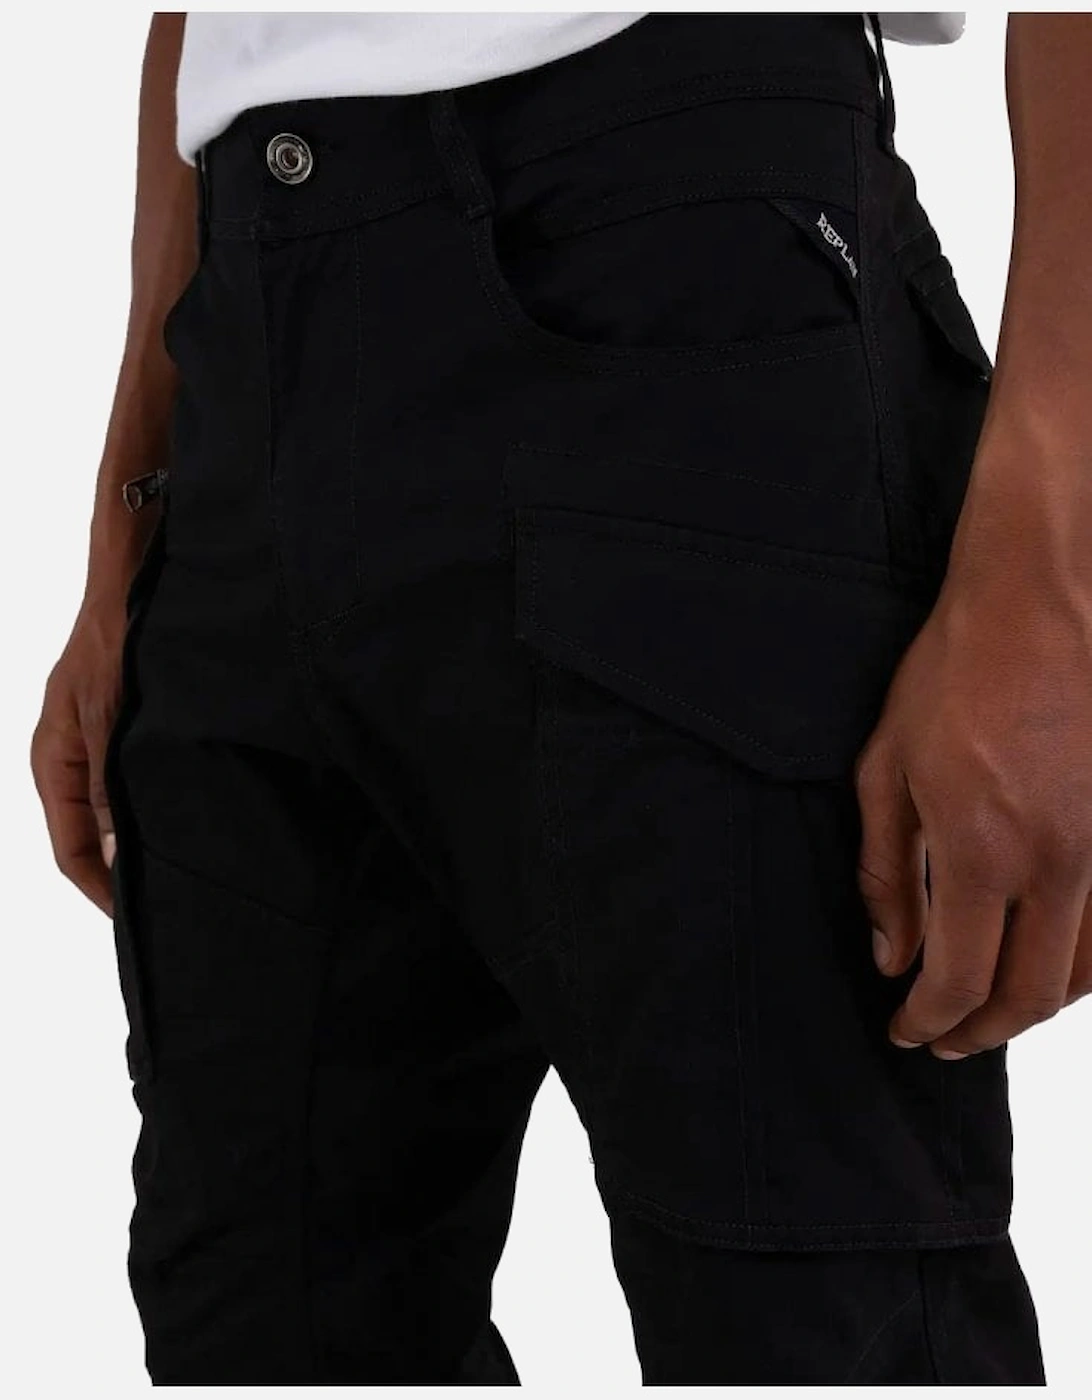 Combat Pants Black With Zip & Pocket Detail 098